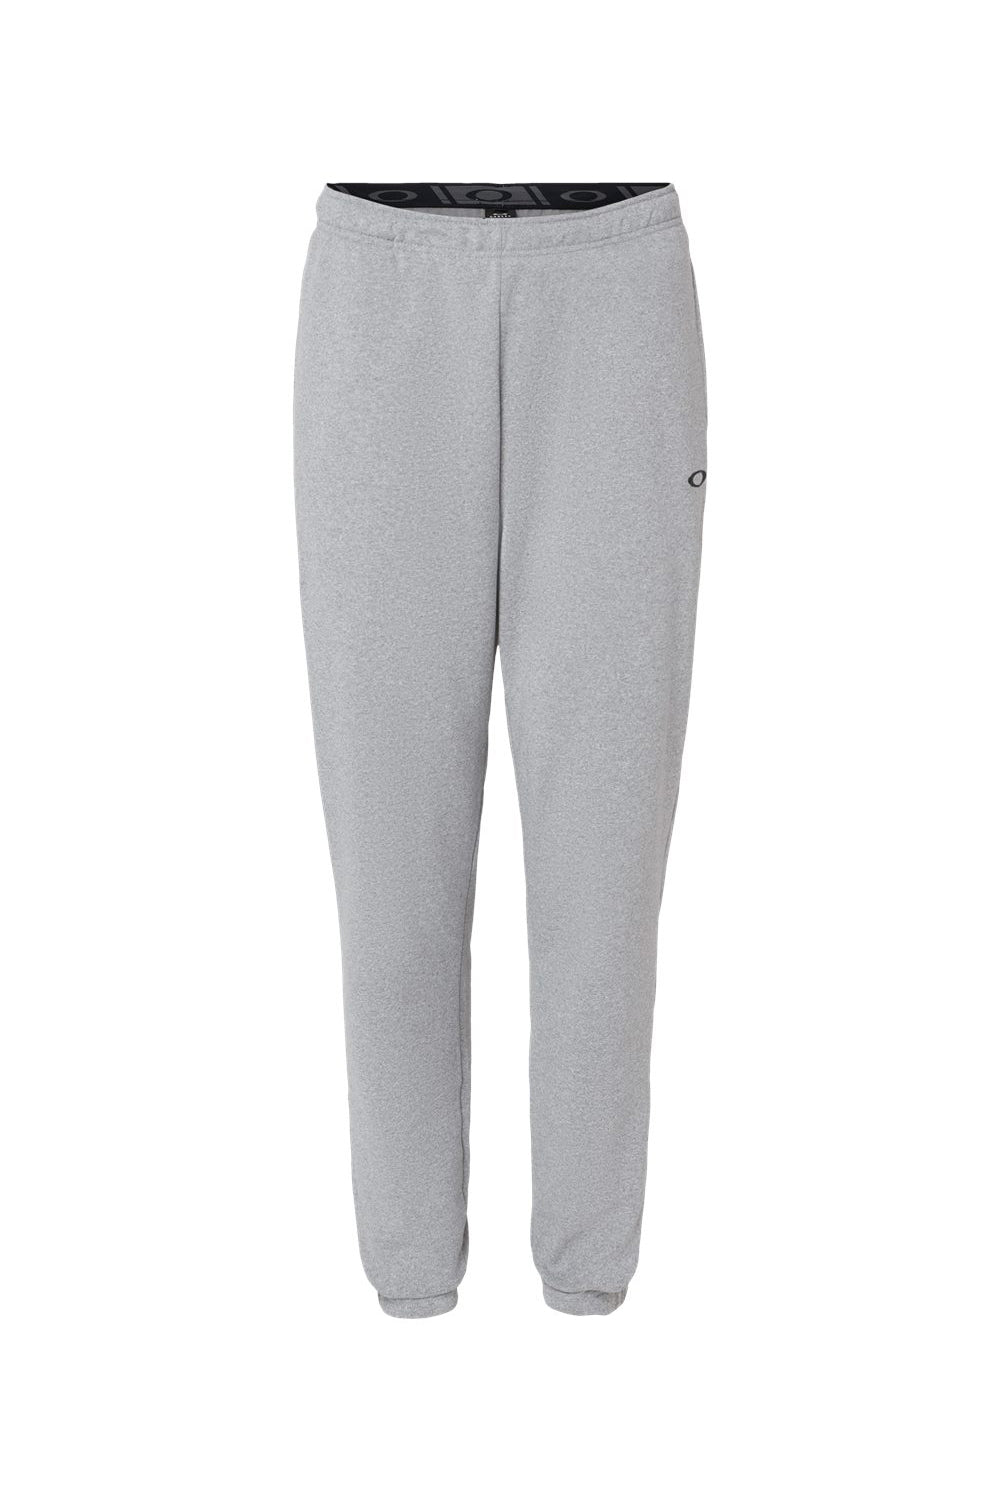 Oakley FOA402996 Mens Team Issue Enduro Hydrolix Sweatpants w/ Pockets Heather Granite Grey Flat Front